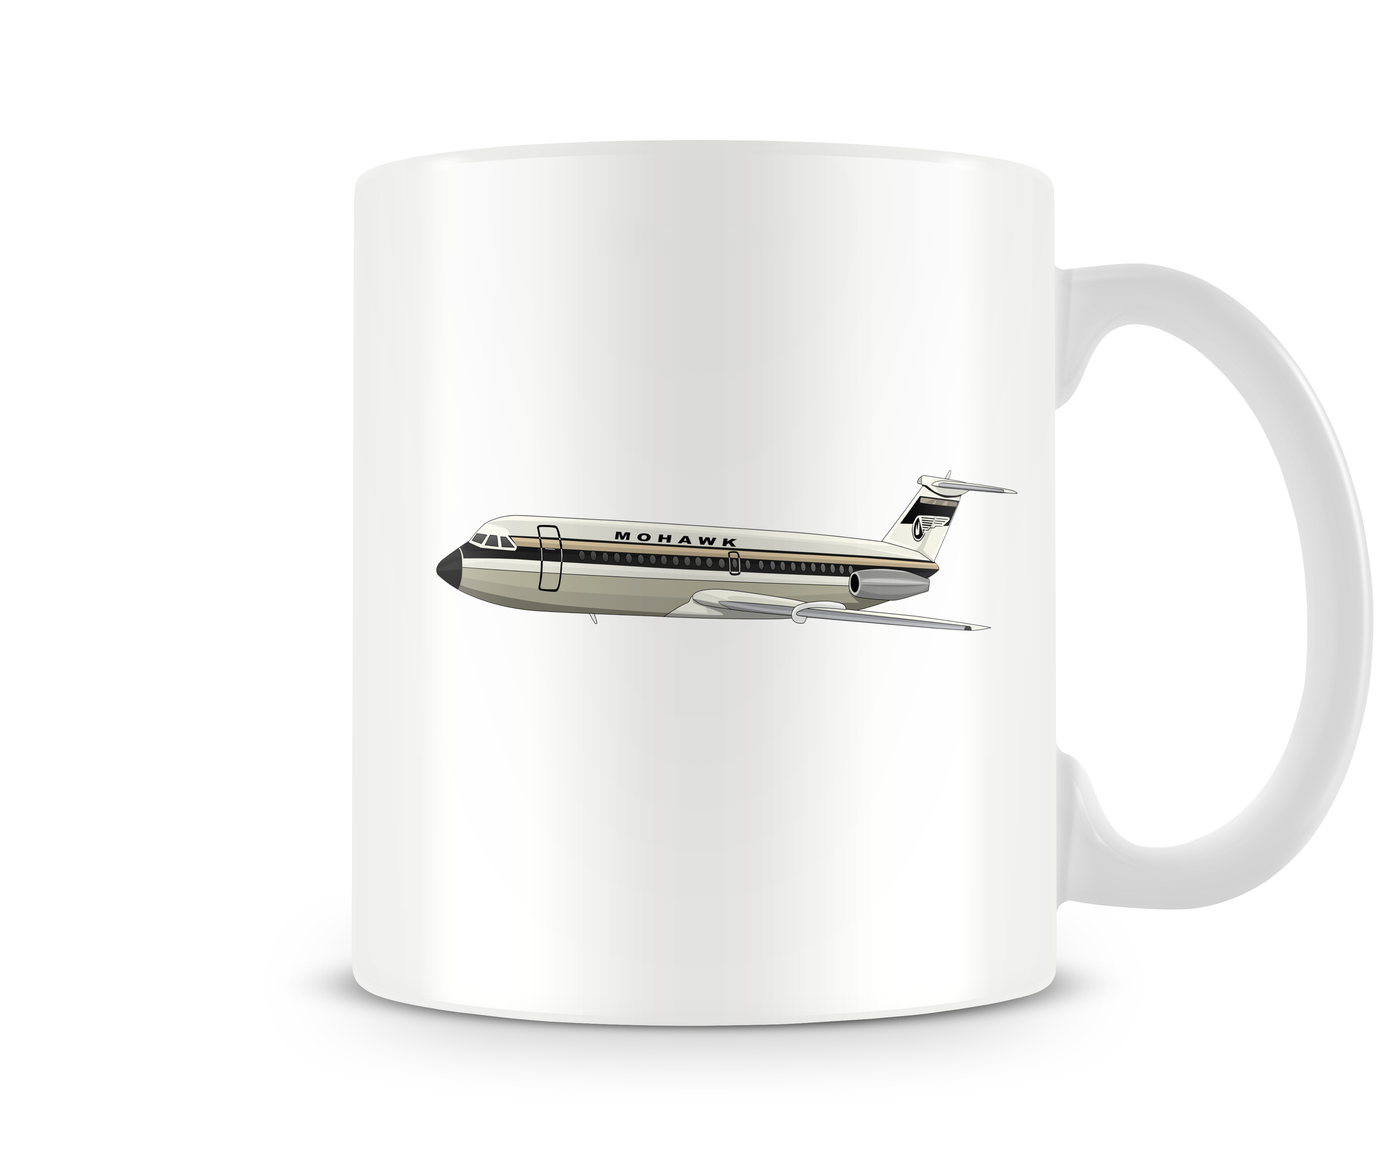 Mohawk Airlines BAC One-Eleven Mug